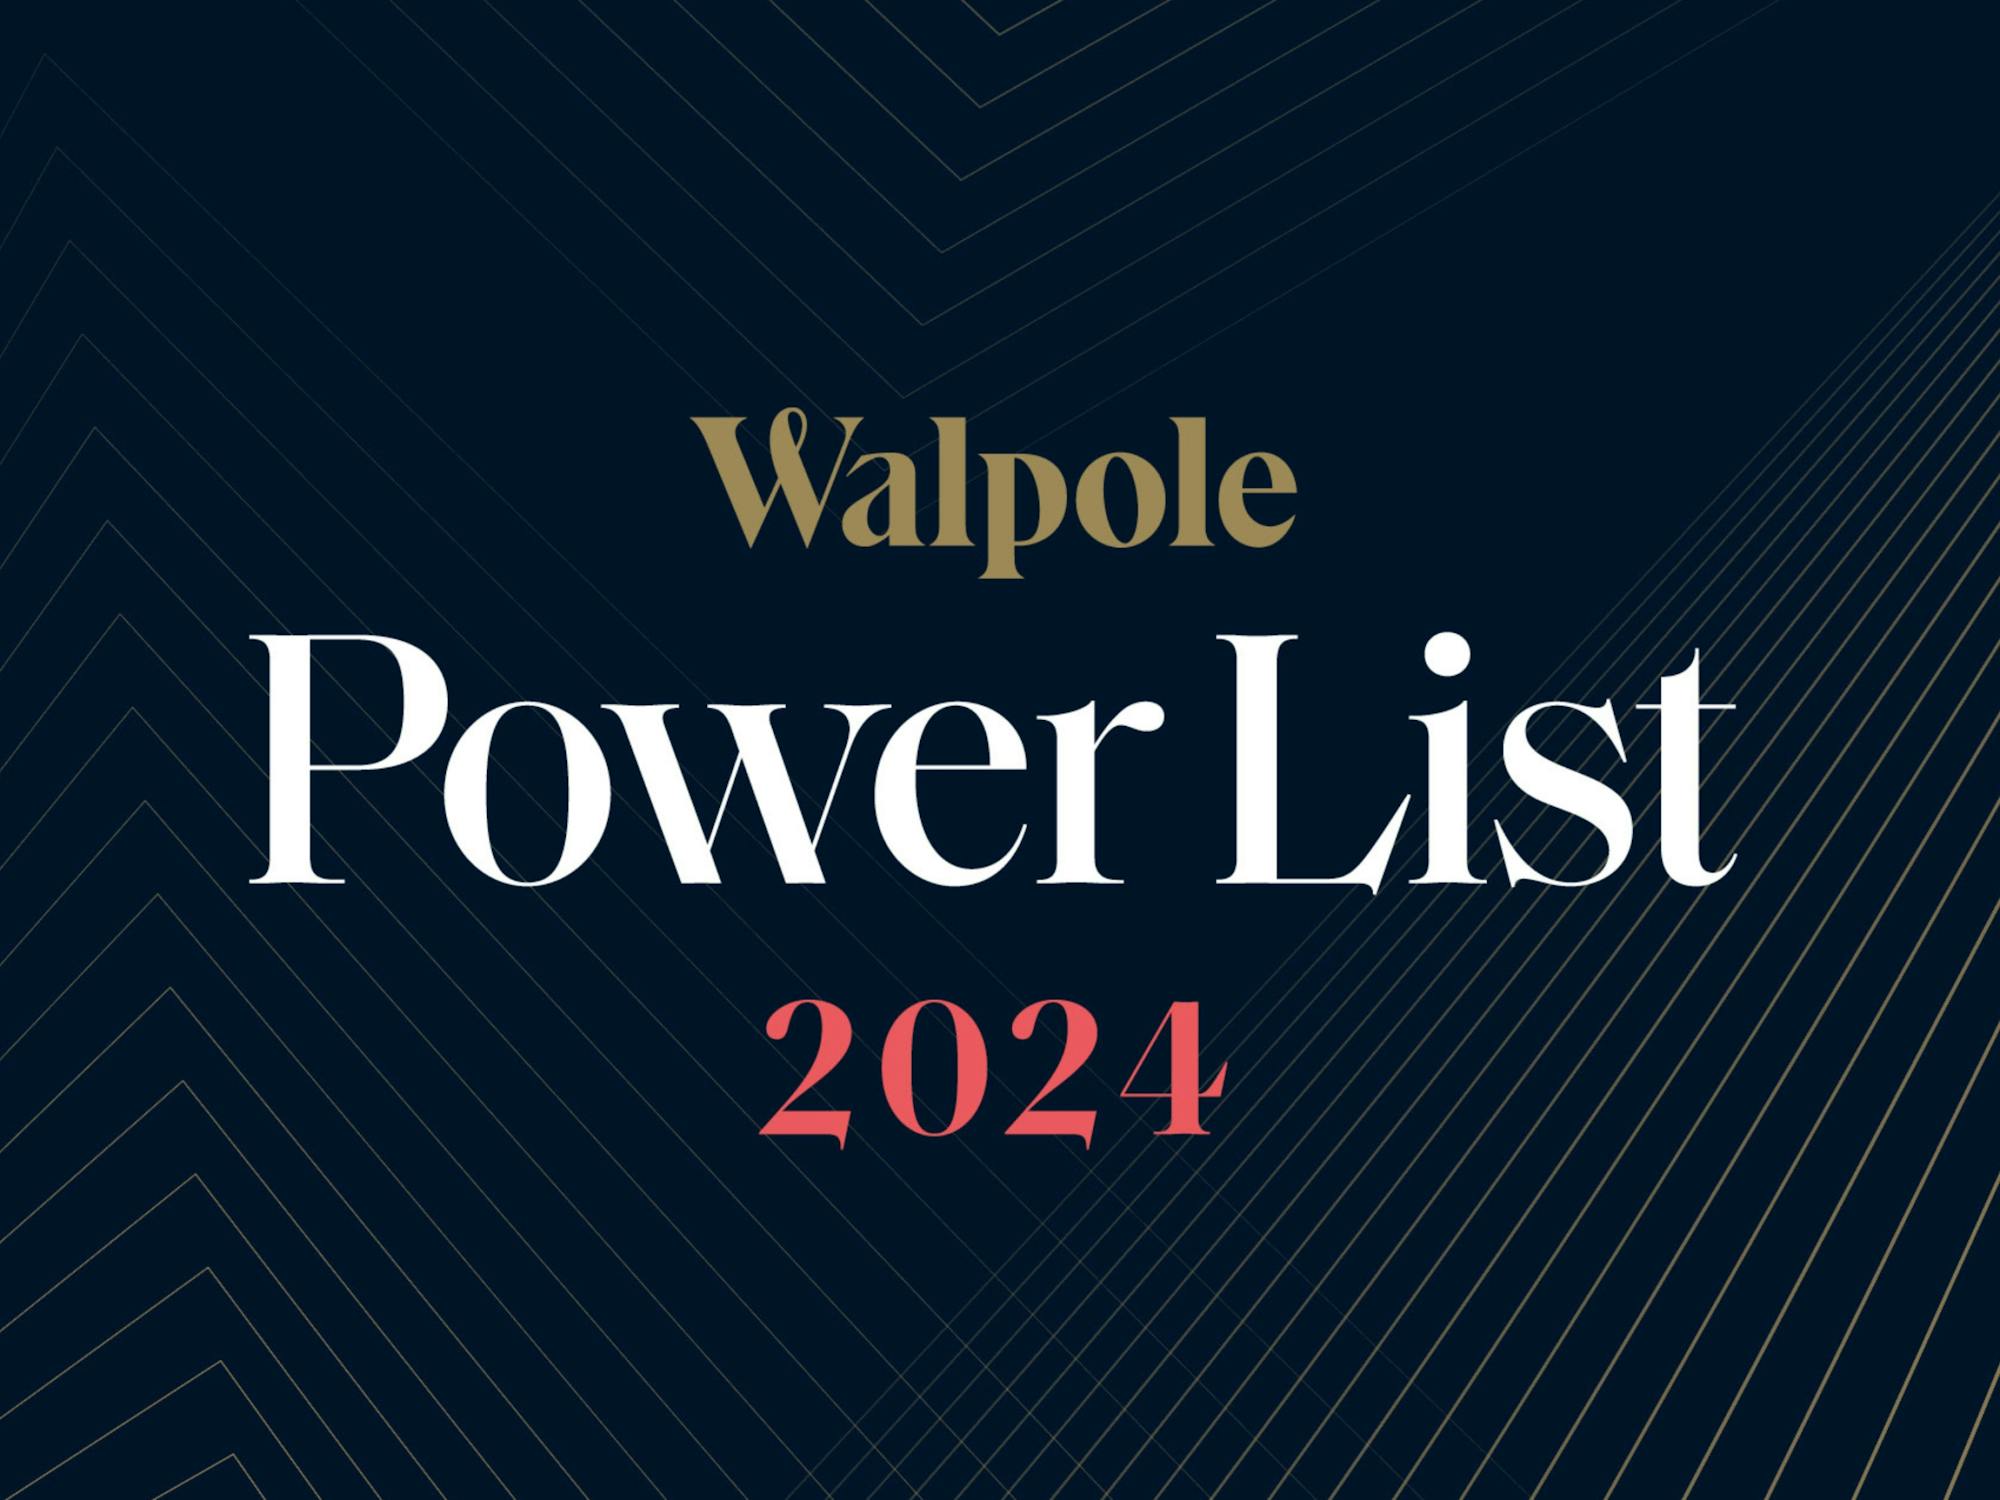 Walpole Power List 2024 Introducing the Walpole Power List 2024 